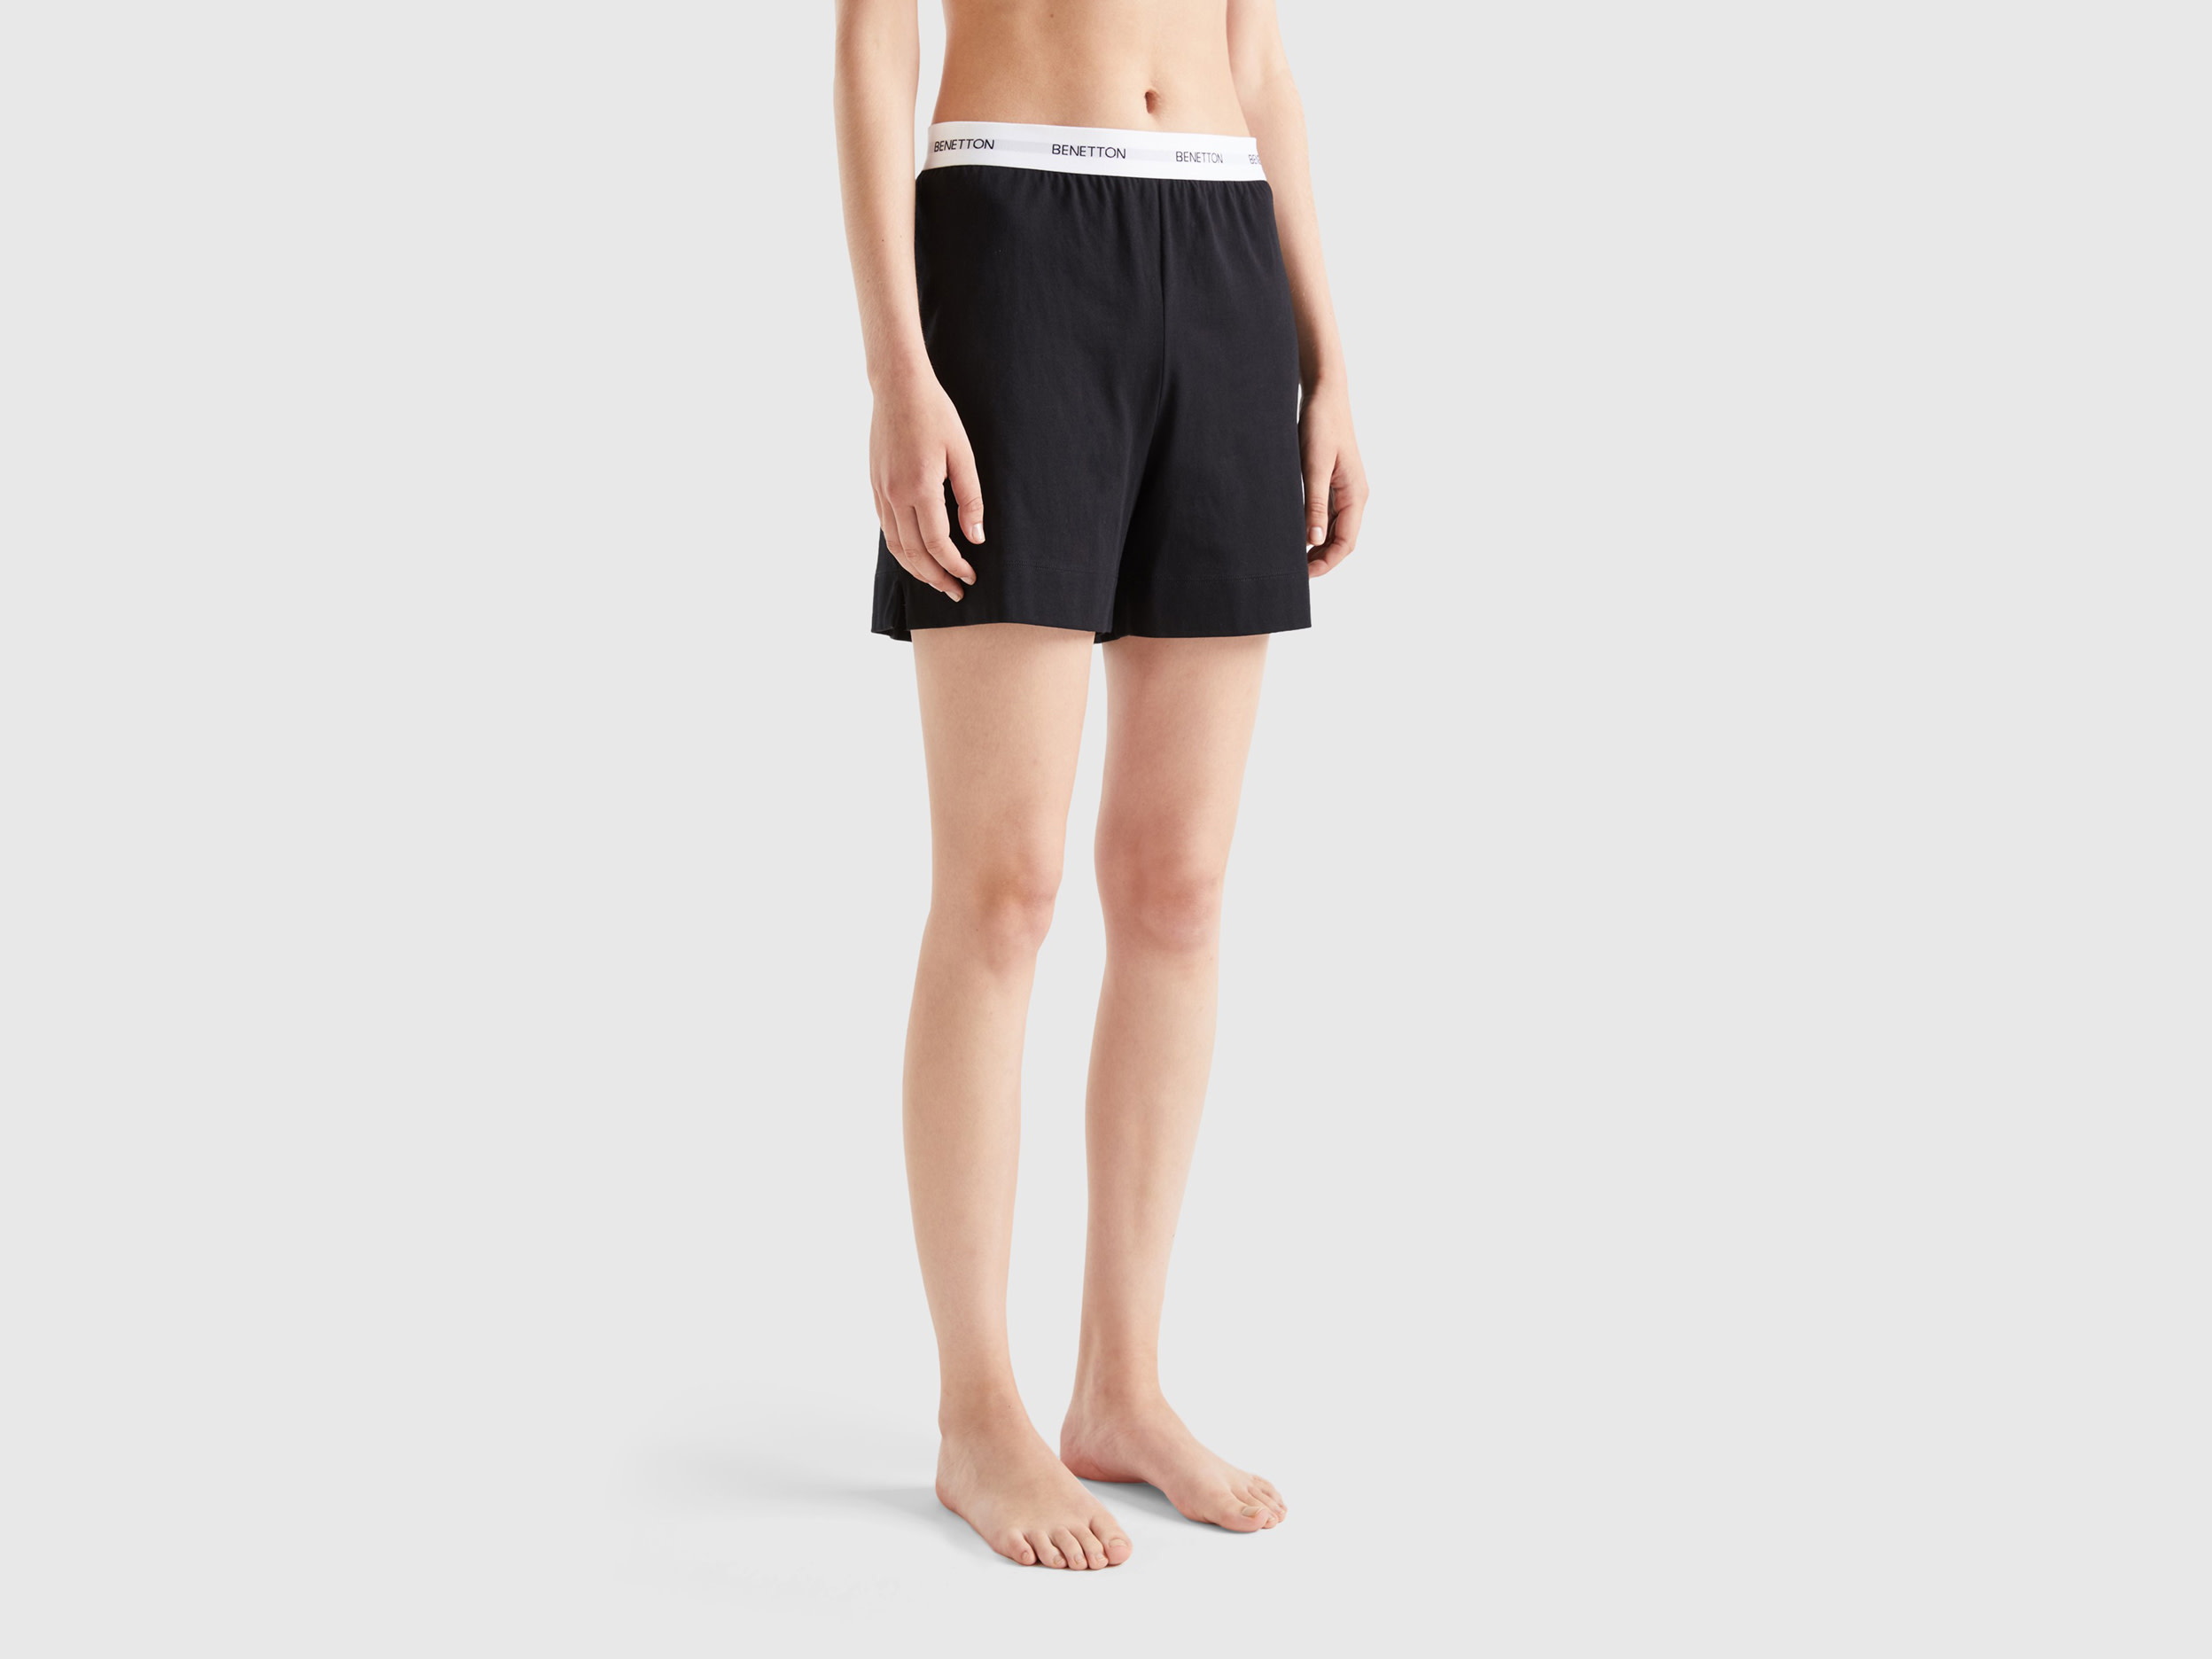 Benetton, Shorts With Logoed Elastic, size M, Black, Women